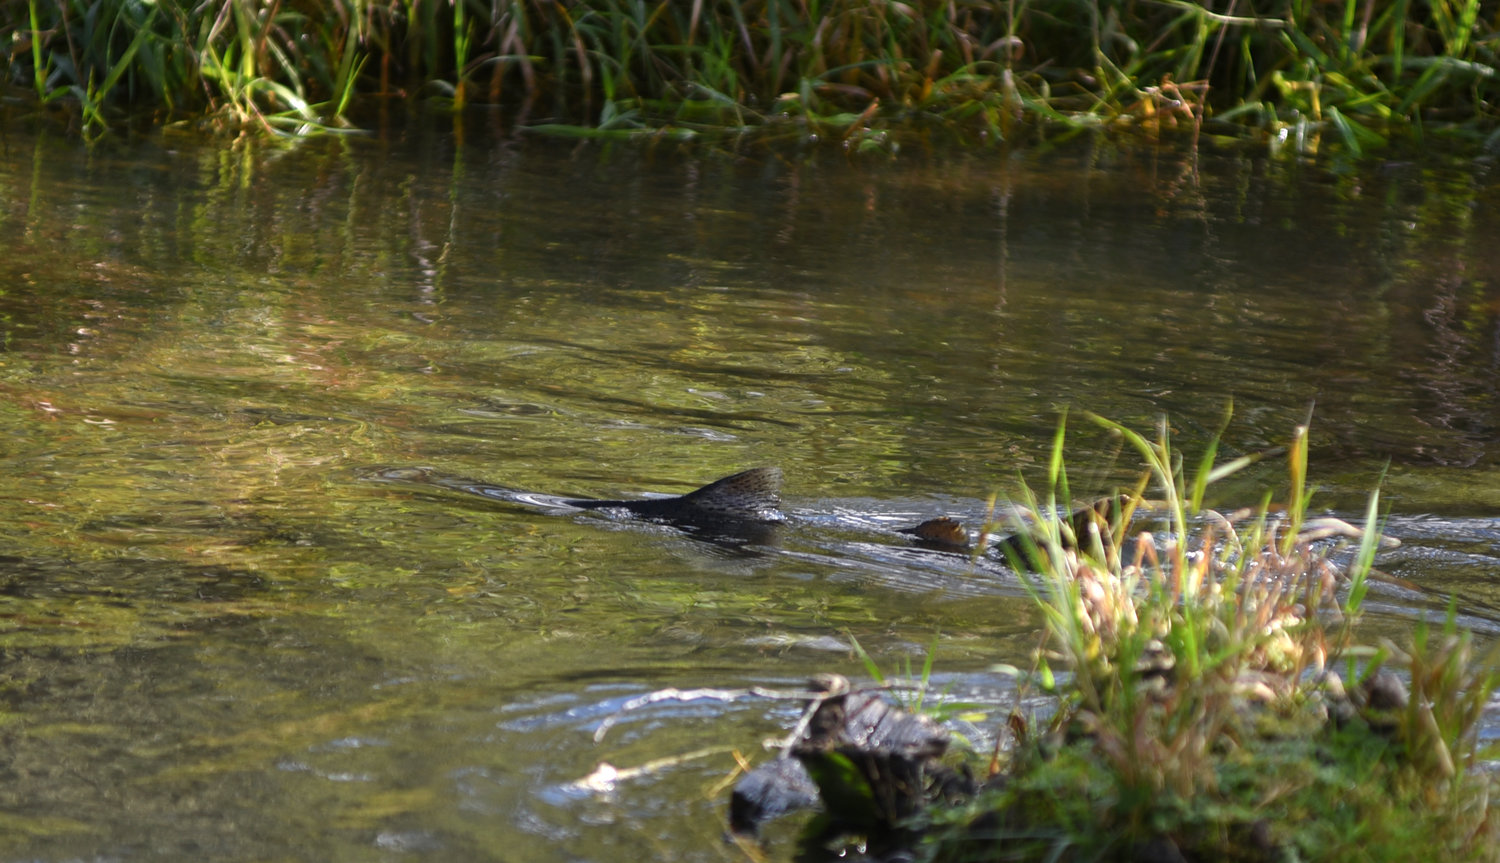 FILE PHOTO — A salmon breaks the surface of the Skookumchuck River near the Skookumchuck Hatchery.